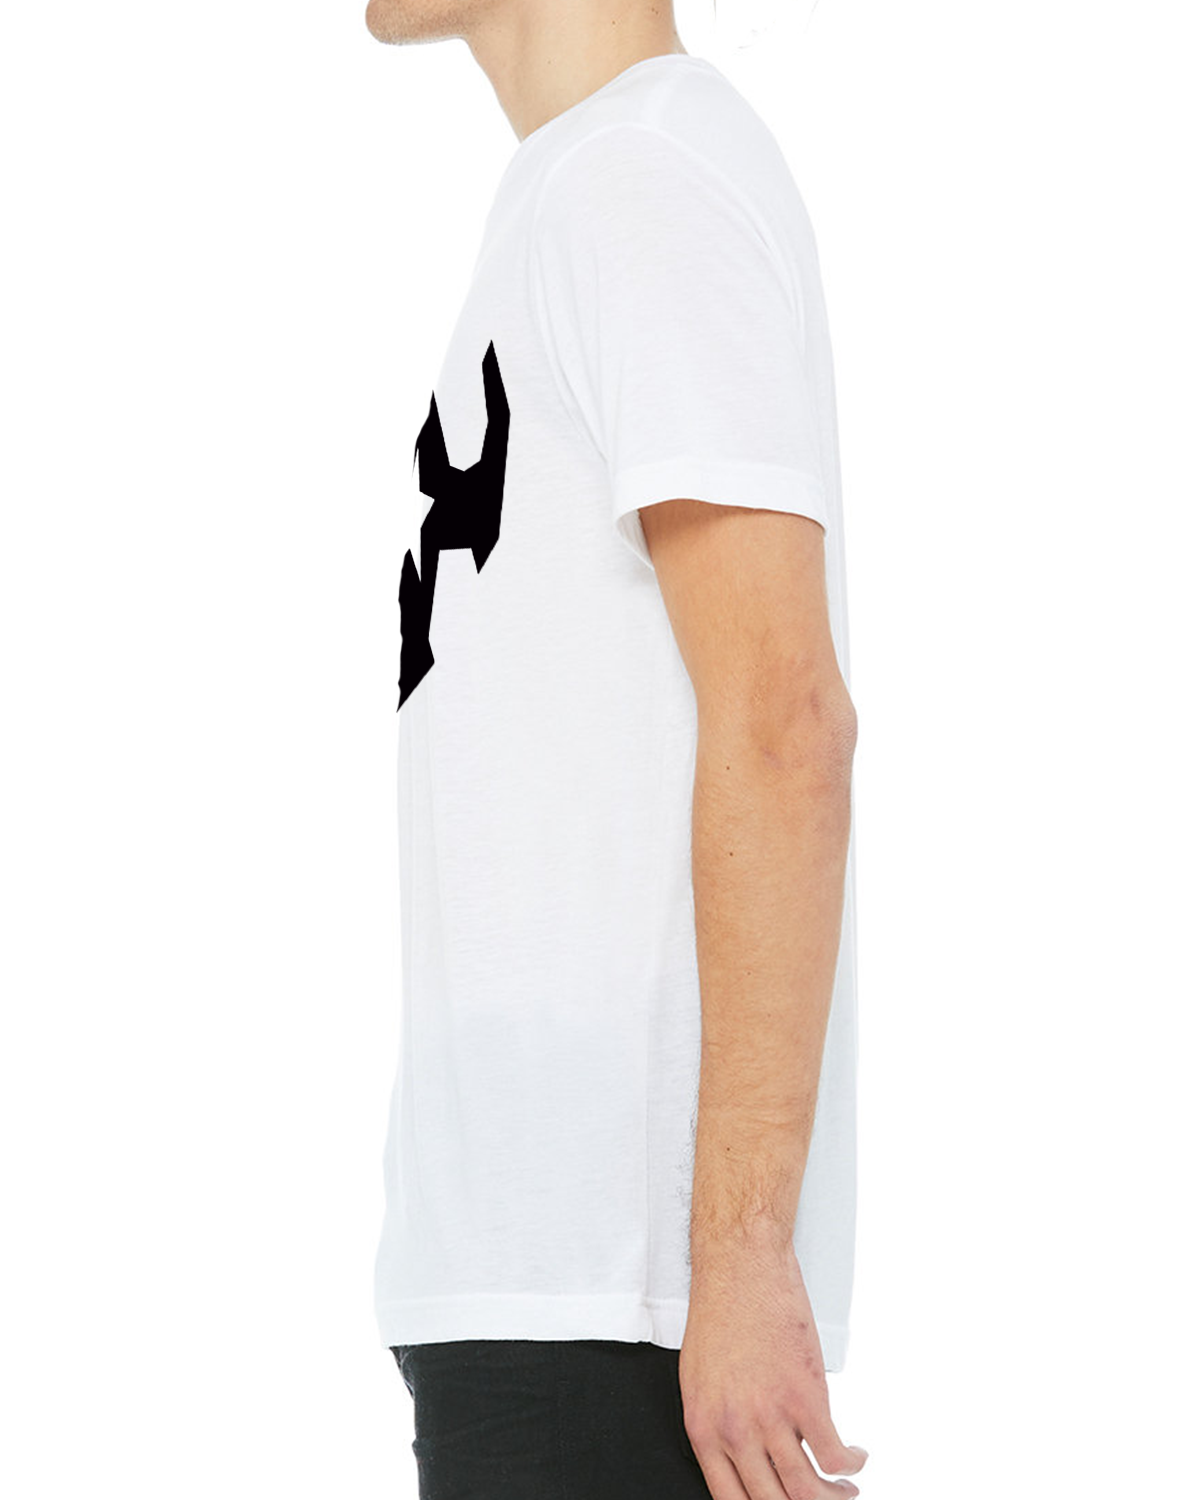 Cheap Affordable Custom Apparel Original White VQRO Bull Chest Emblem T-Shirt 